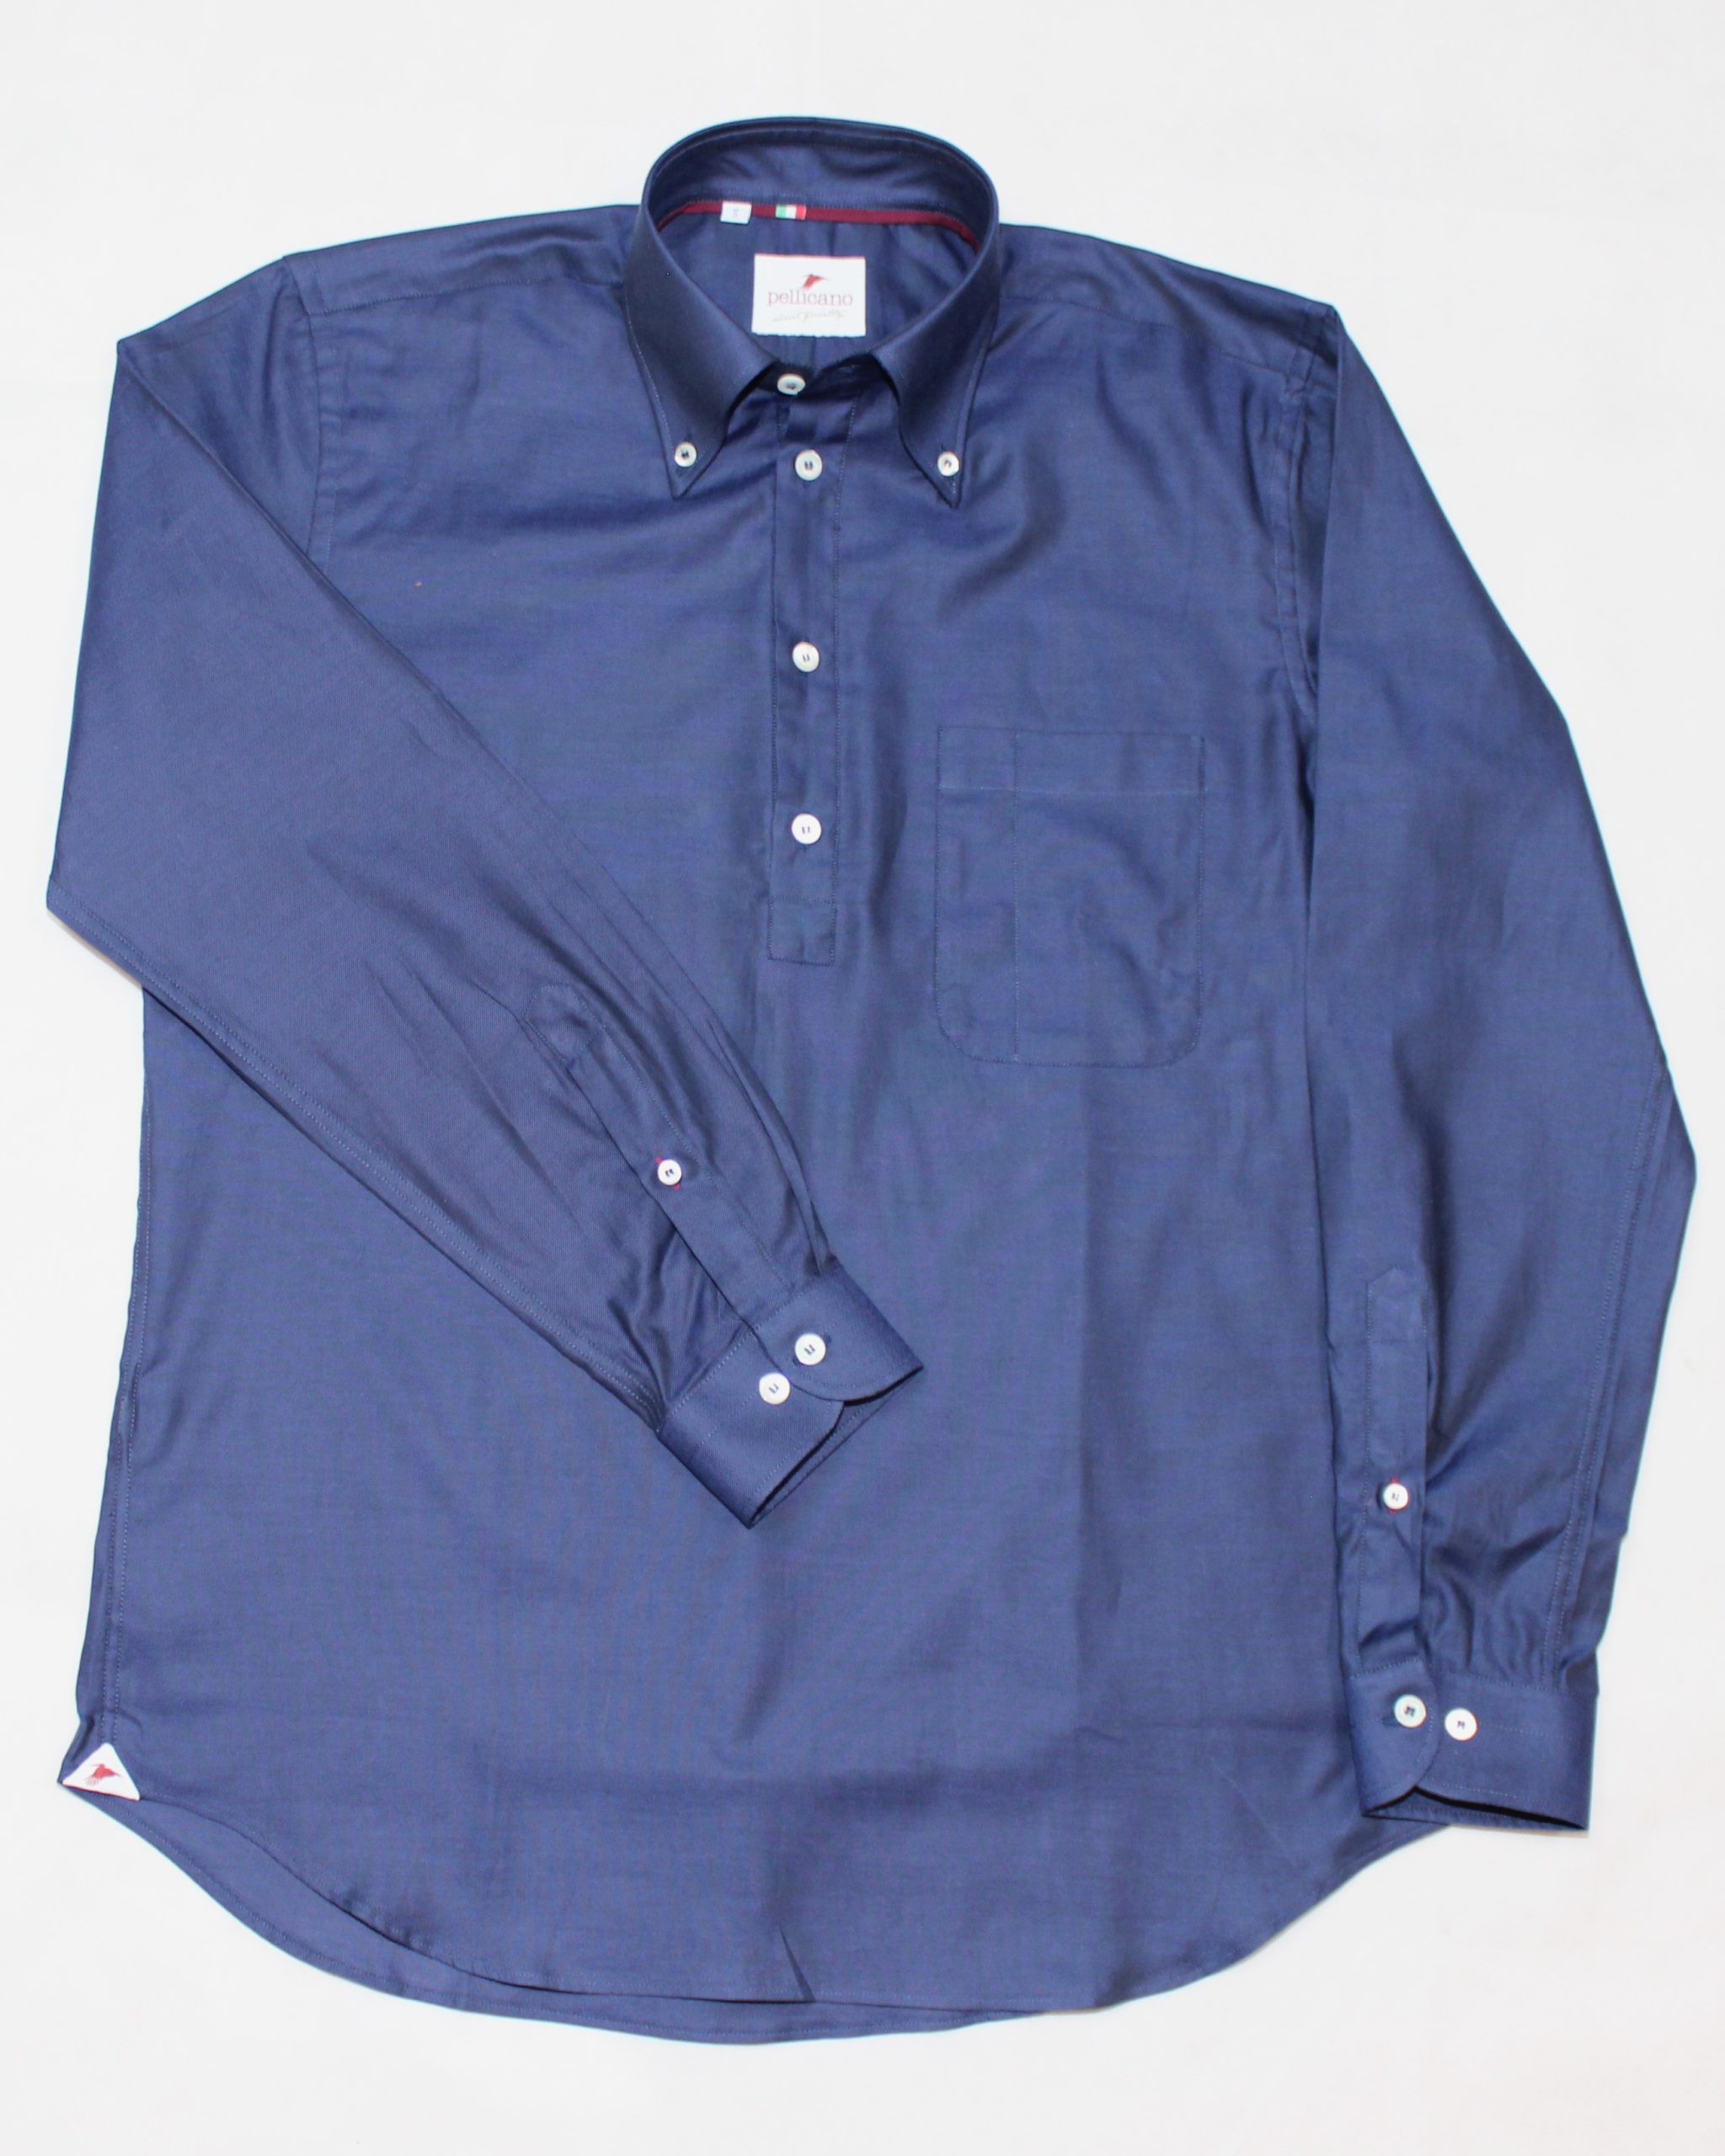 A Men's Oxford Popover Shirt in Navy Cotton - Pellicano Menswear